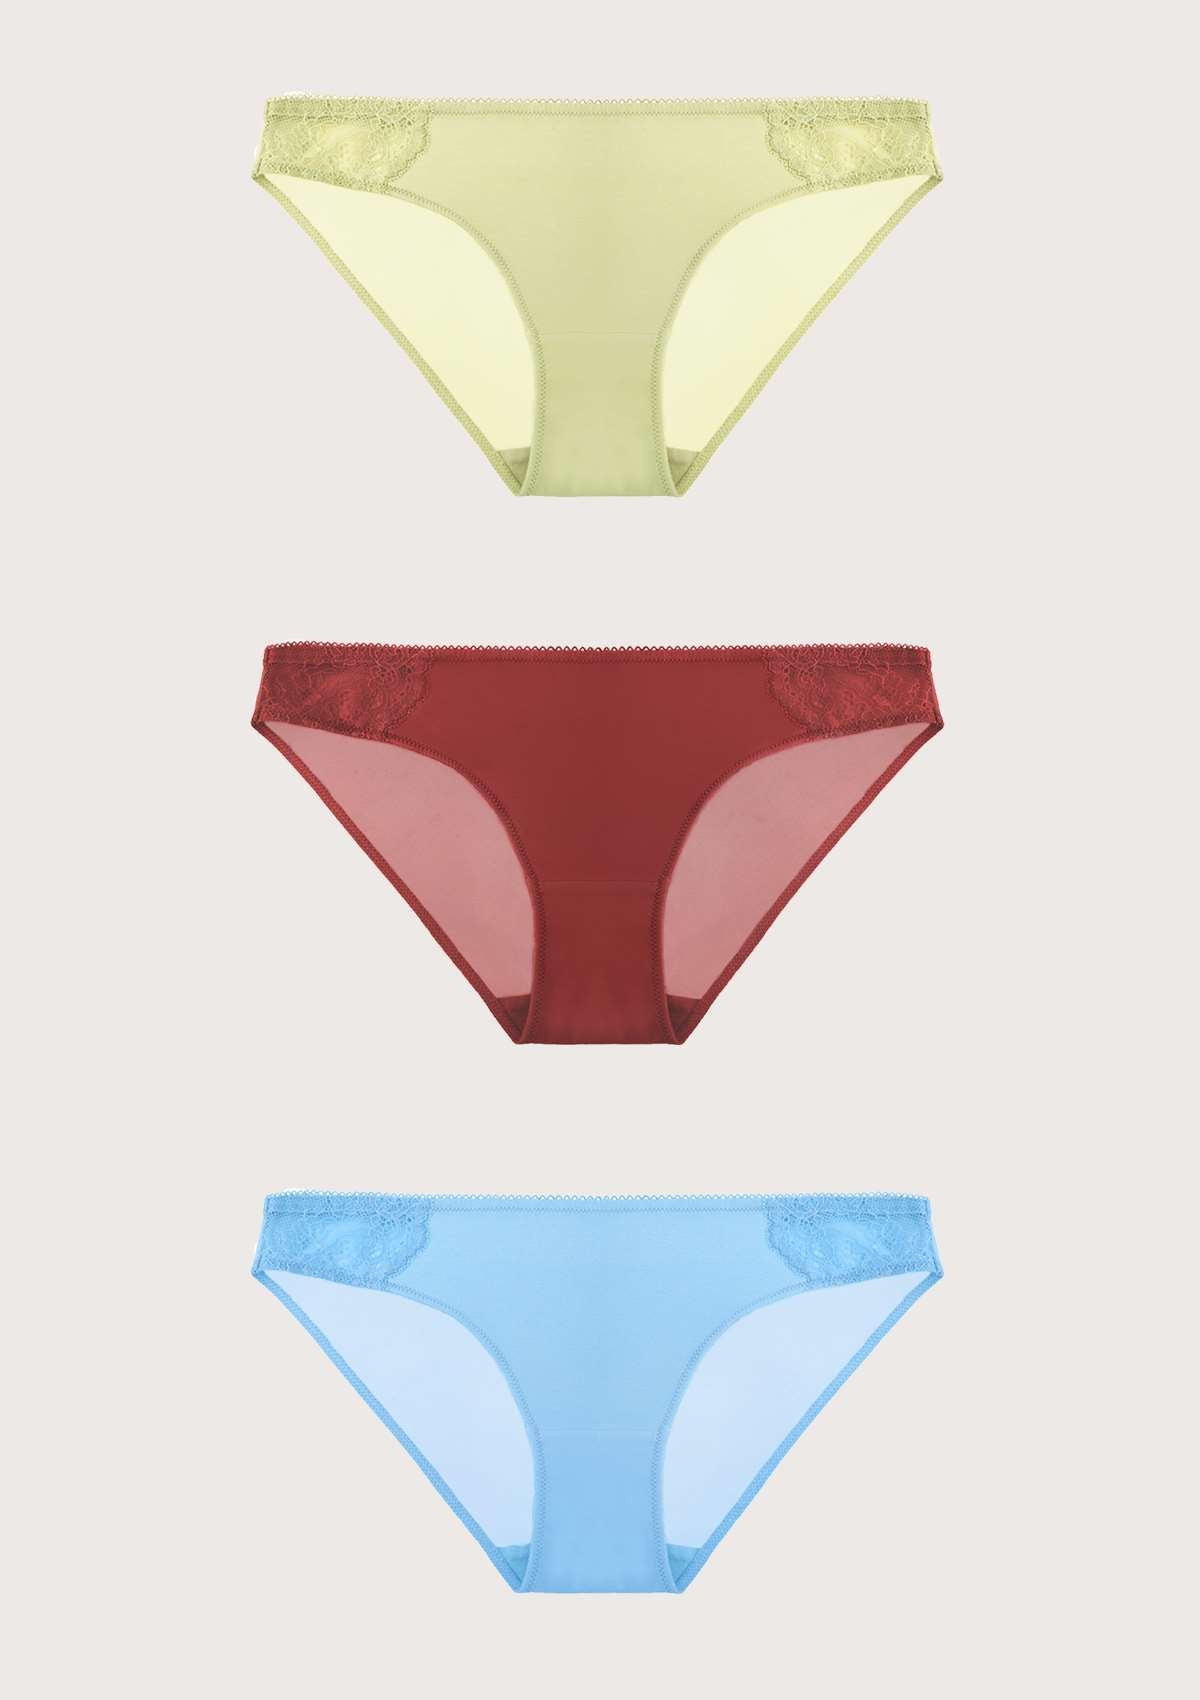 HSIA Soft Stretch Lace Bikini Panties 3 Pack - XL / Light Green+Crimson+Light Blue